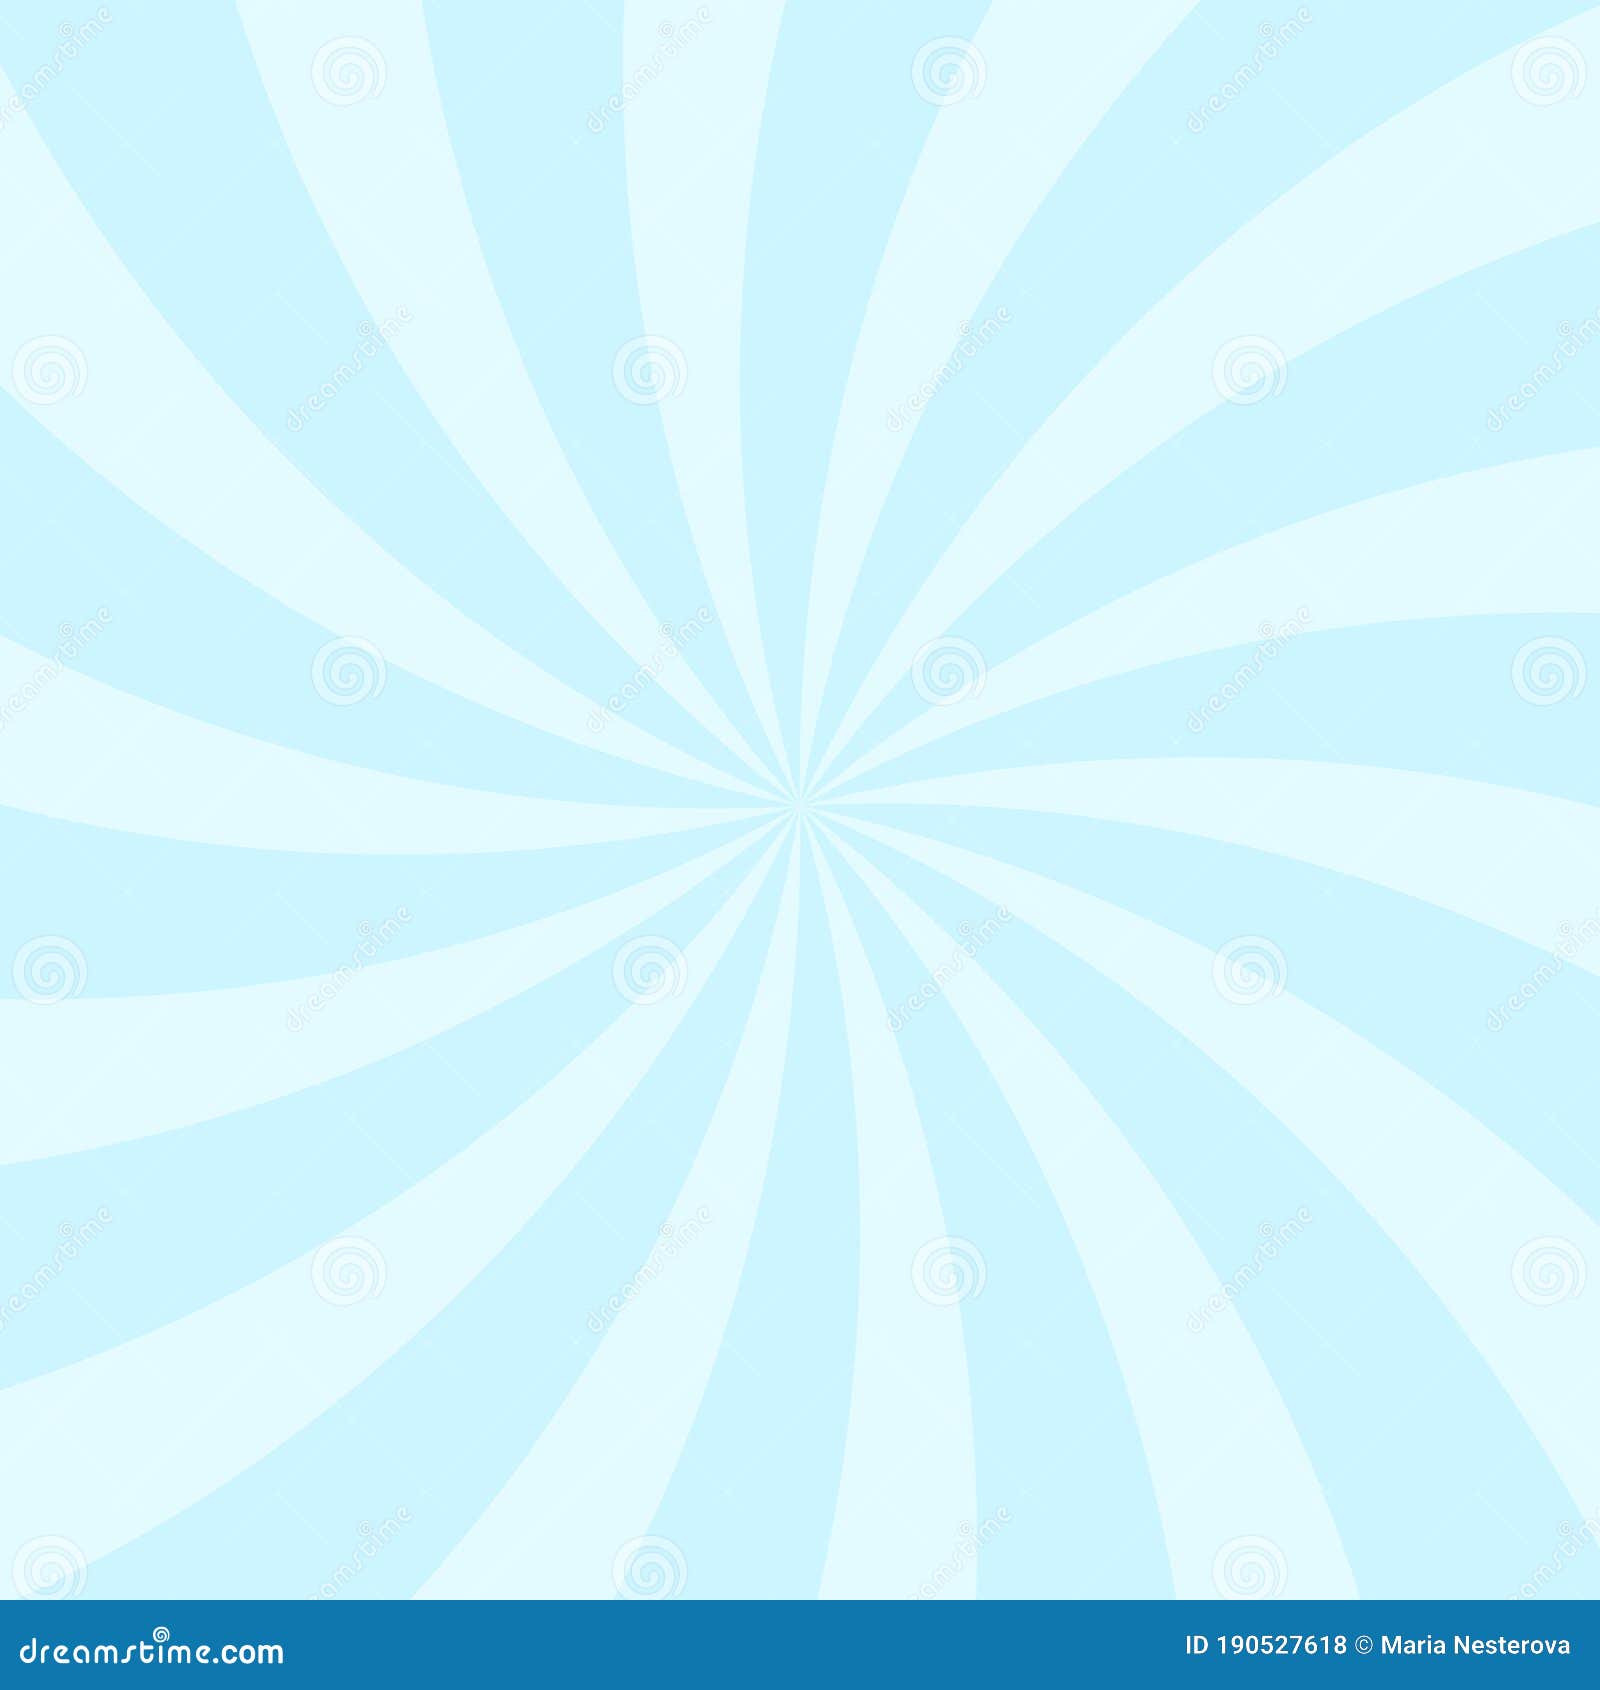 Sunlight Swirl Rays Background. Blue and White Spiral Burst Wallpaper Stock  Illustration - Illustration of spiral, shiny: 190527618